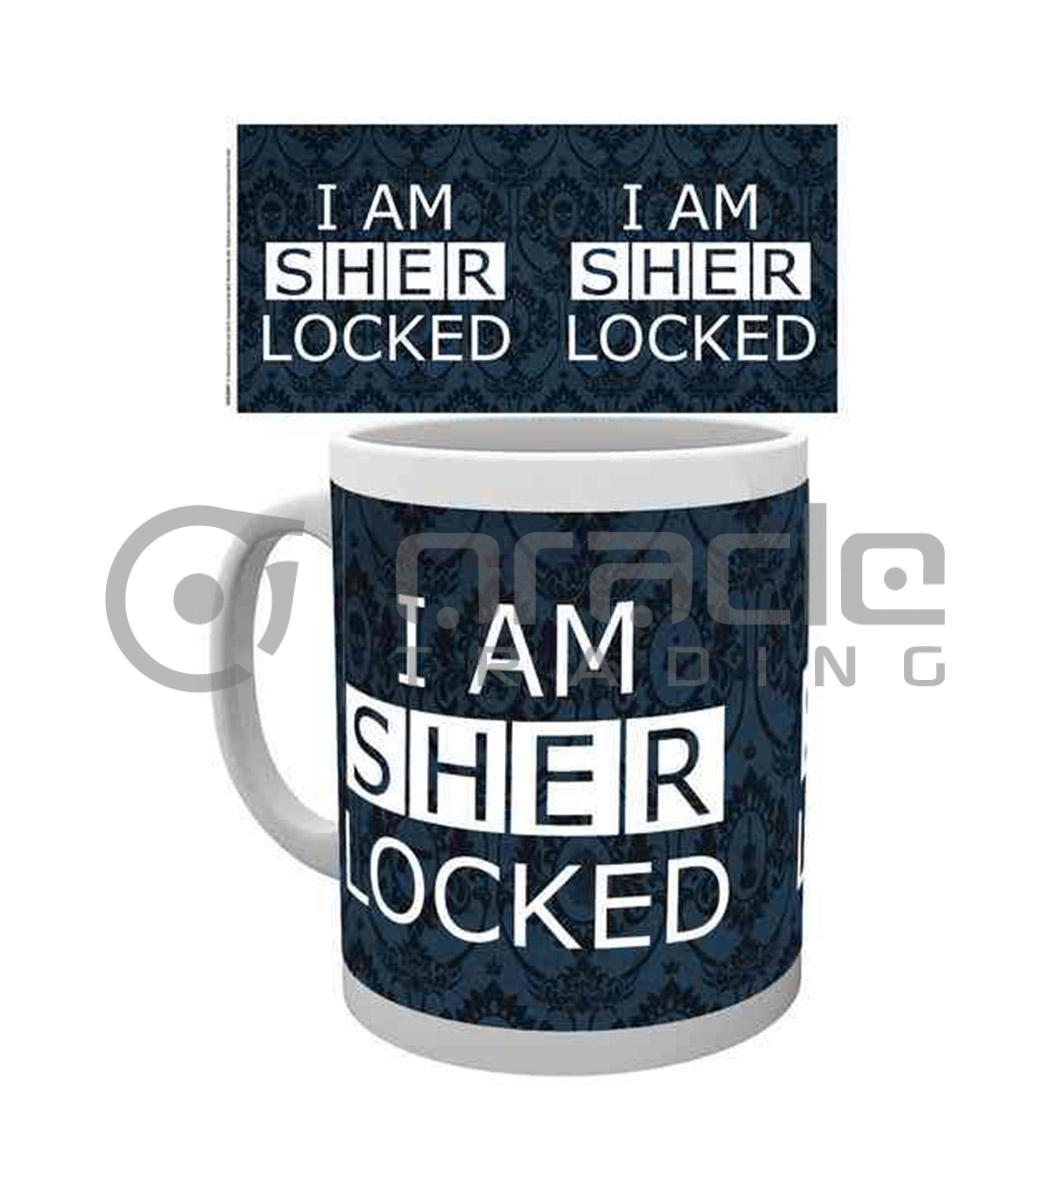 Sherlock Mug - I am Sherlocked